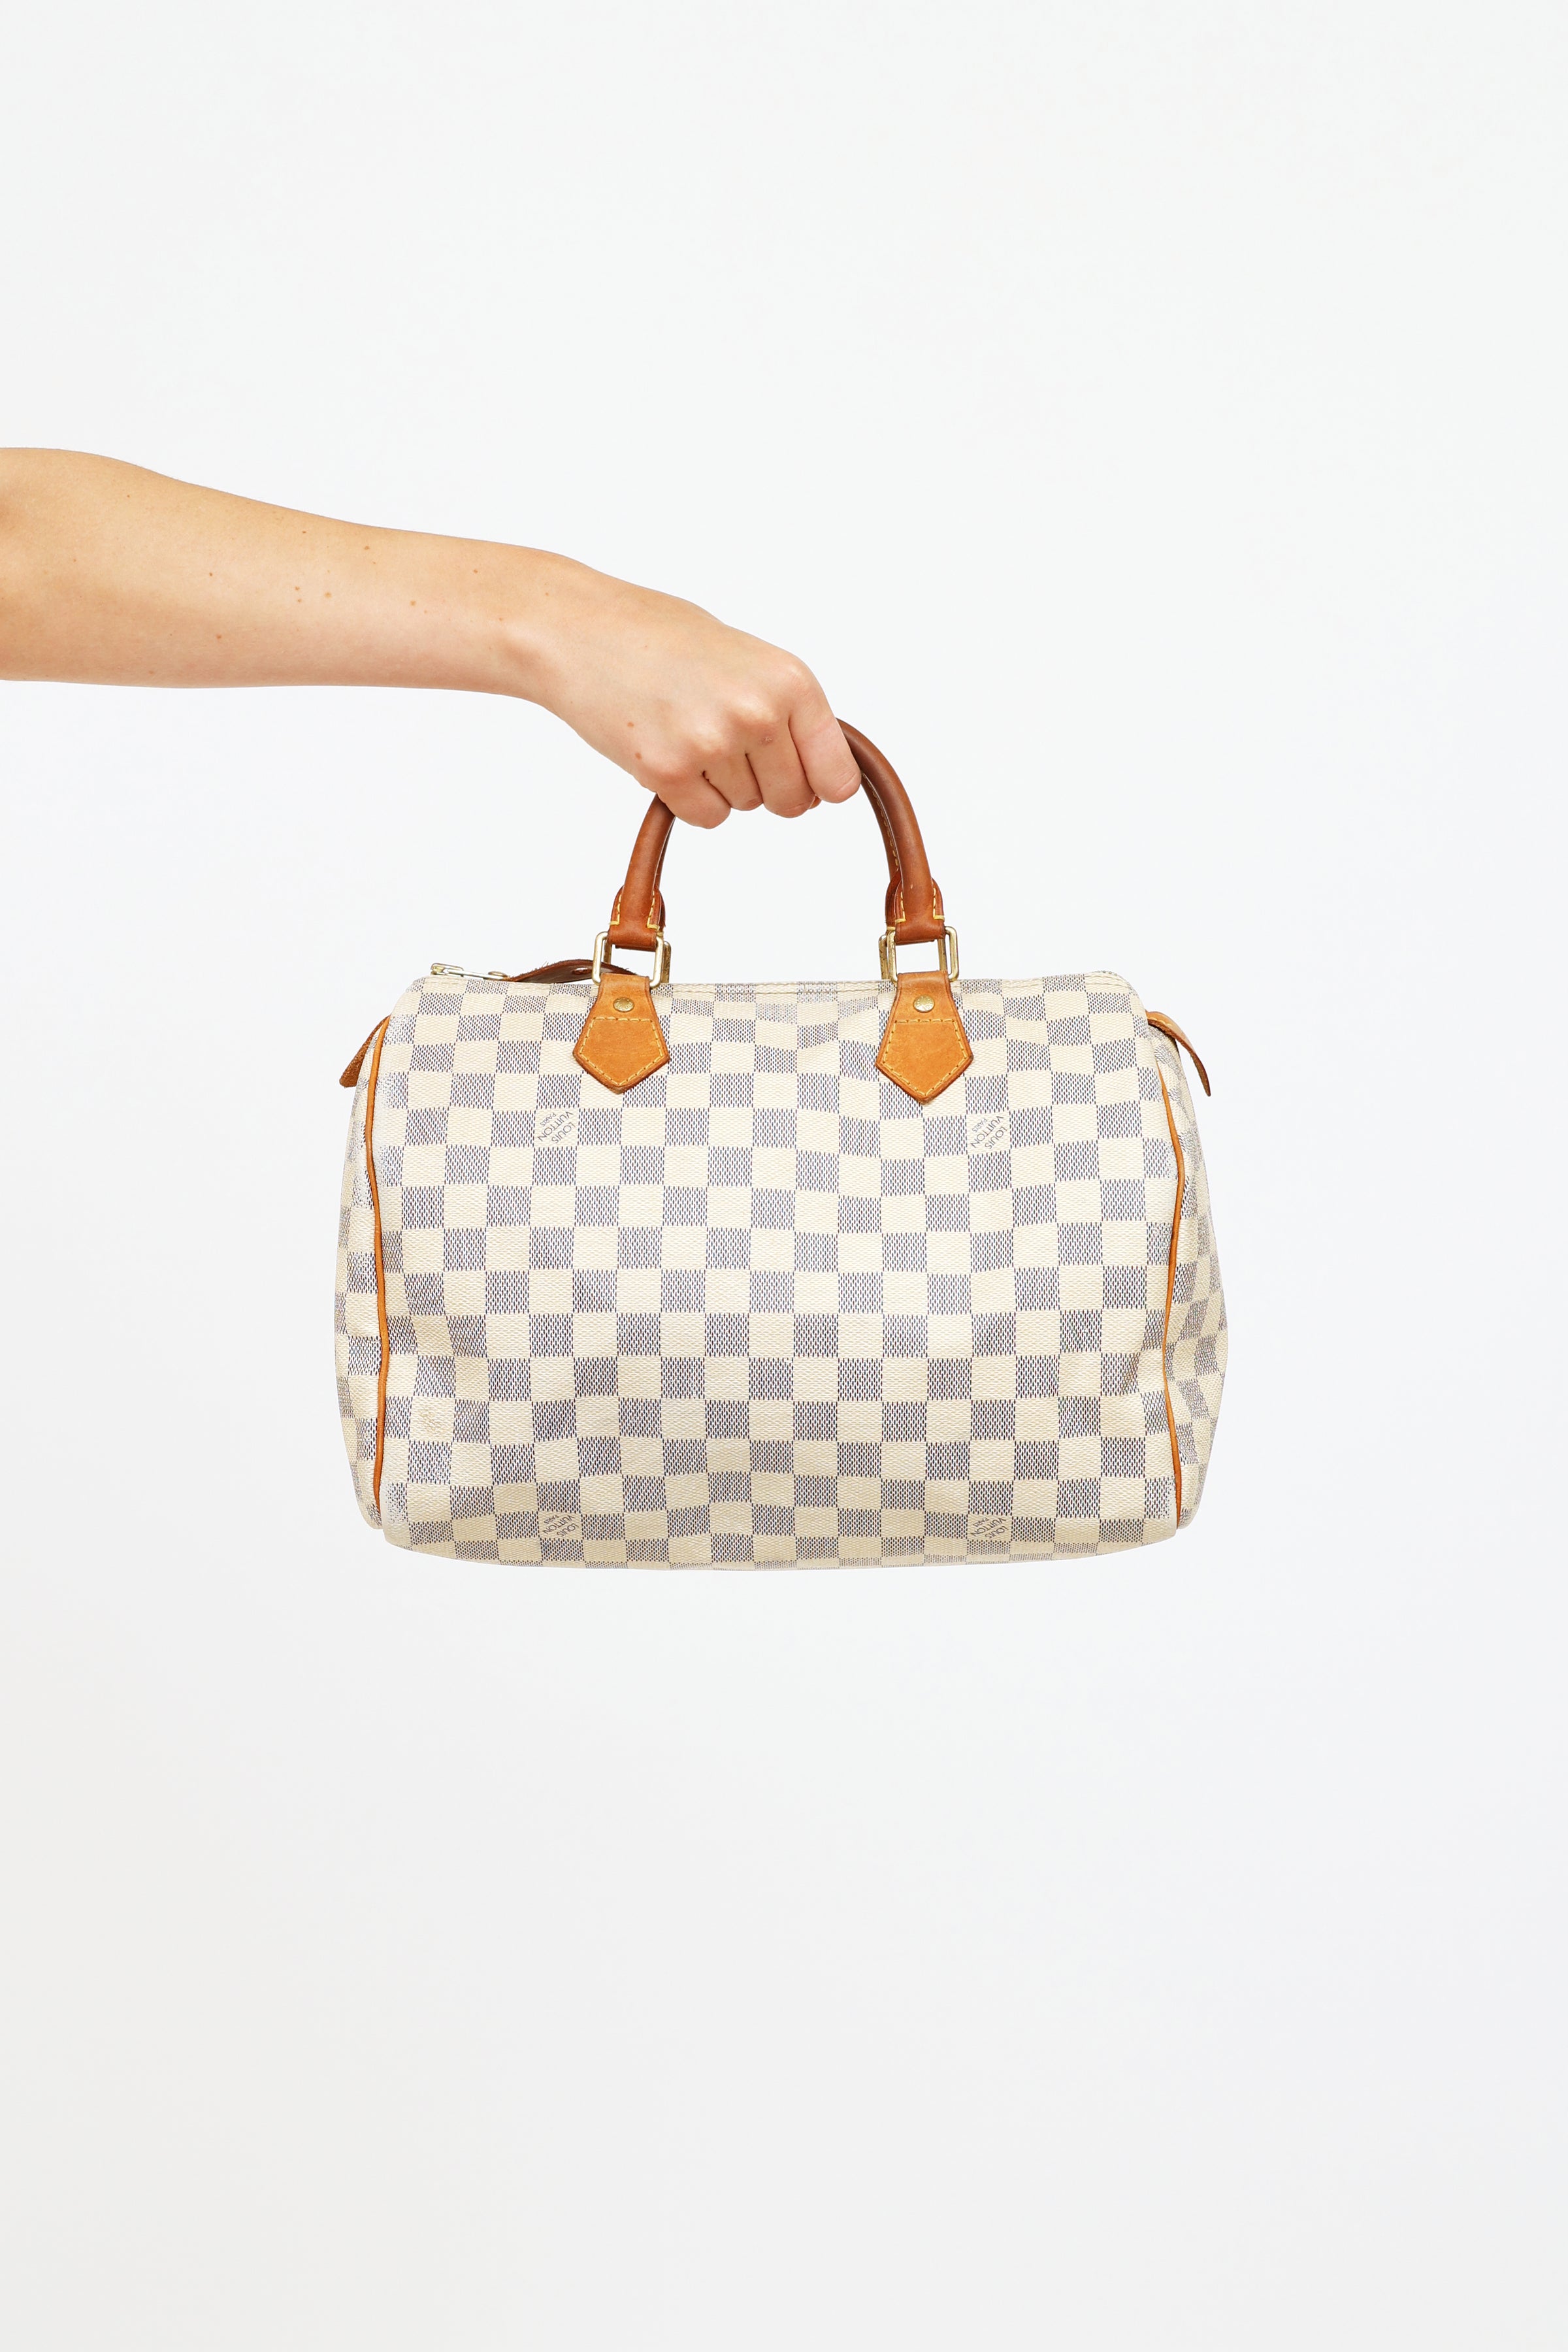 Louis Vuitton Speedy Handbag Damier 30 White 2355412